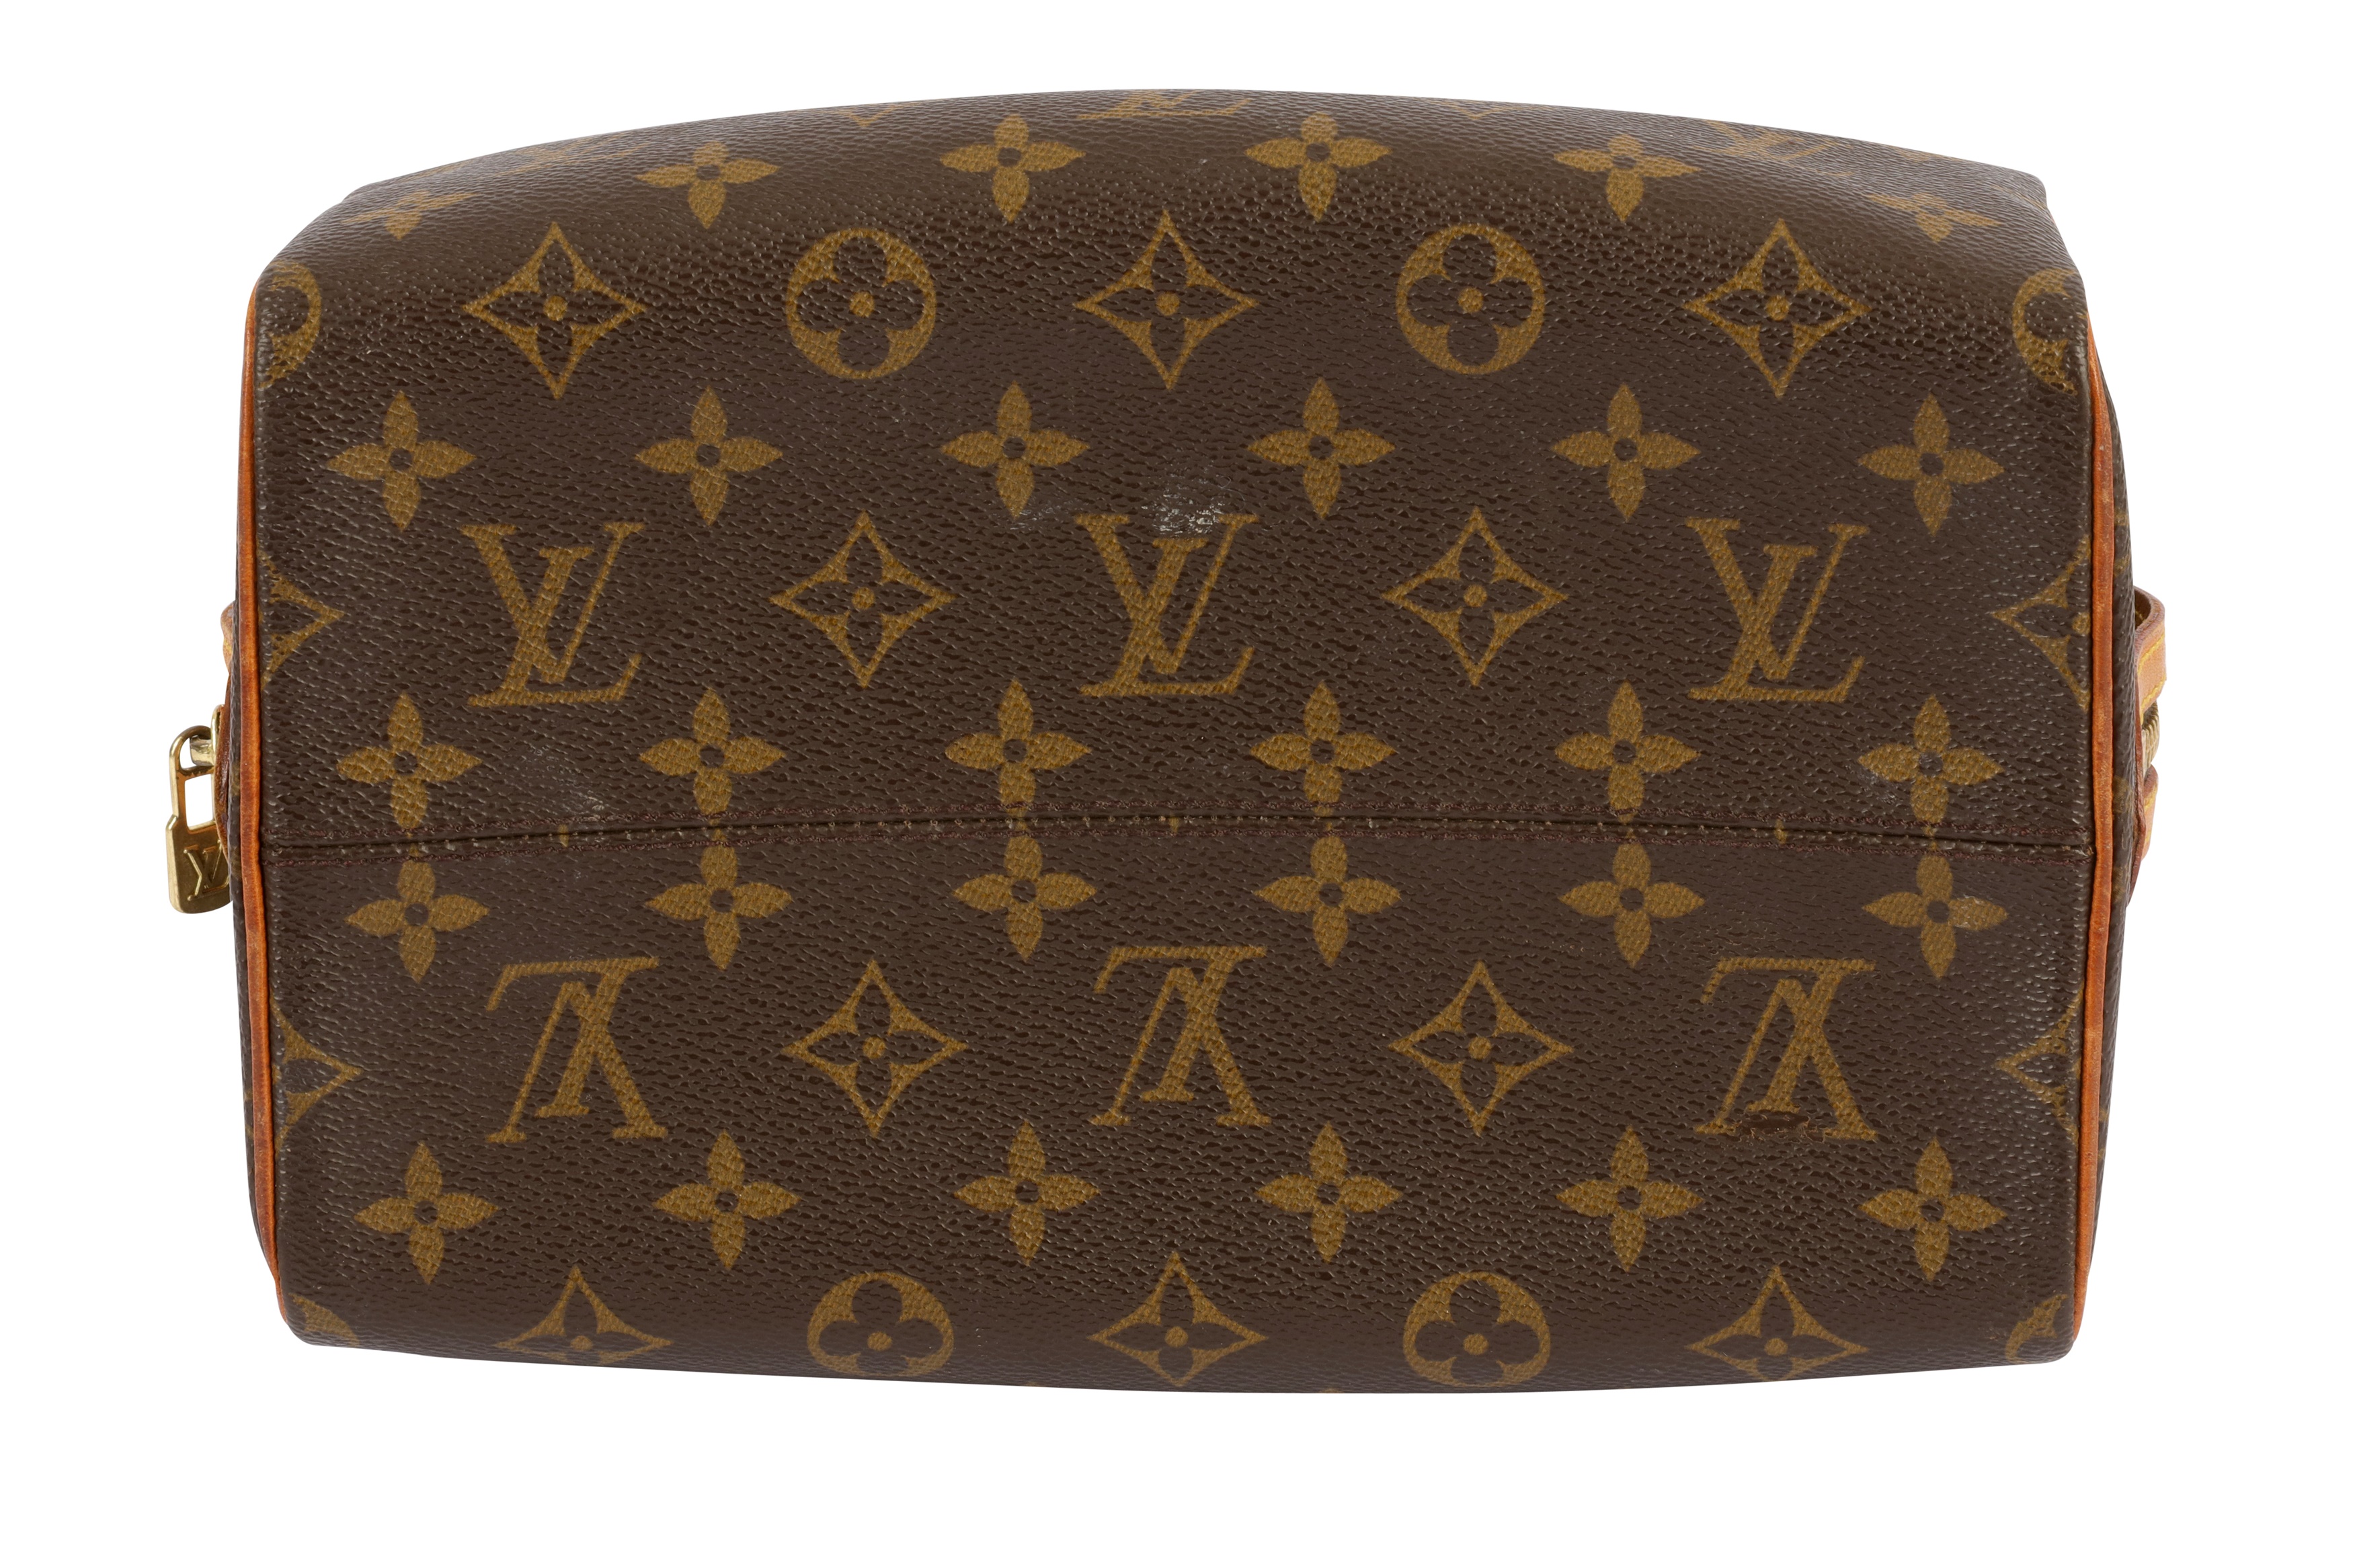 Lot 480 - Louis Vuitton Monogram Toiletry Bag